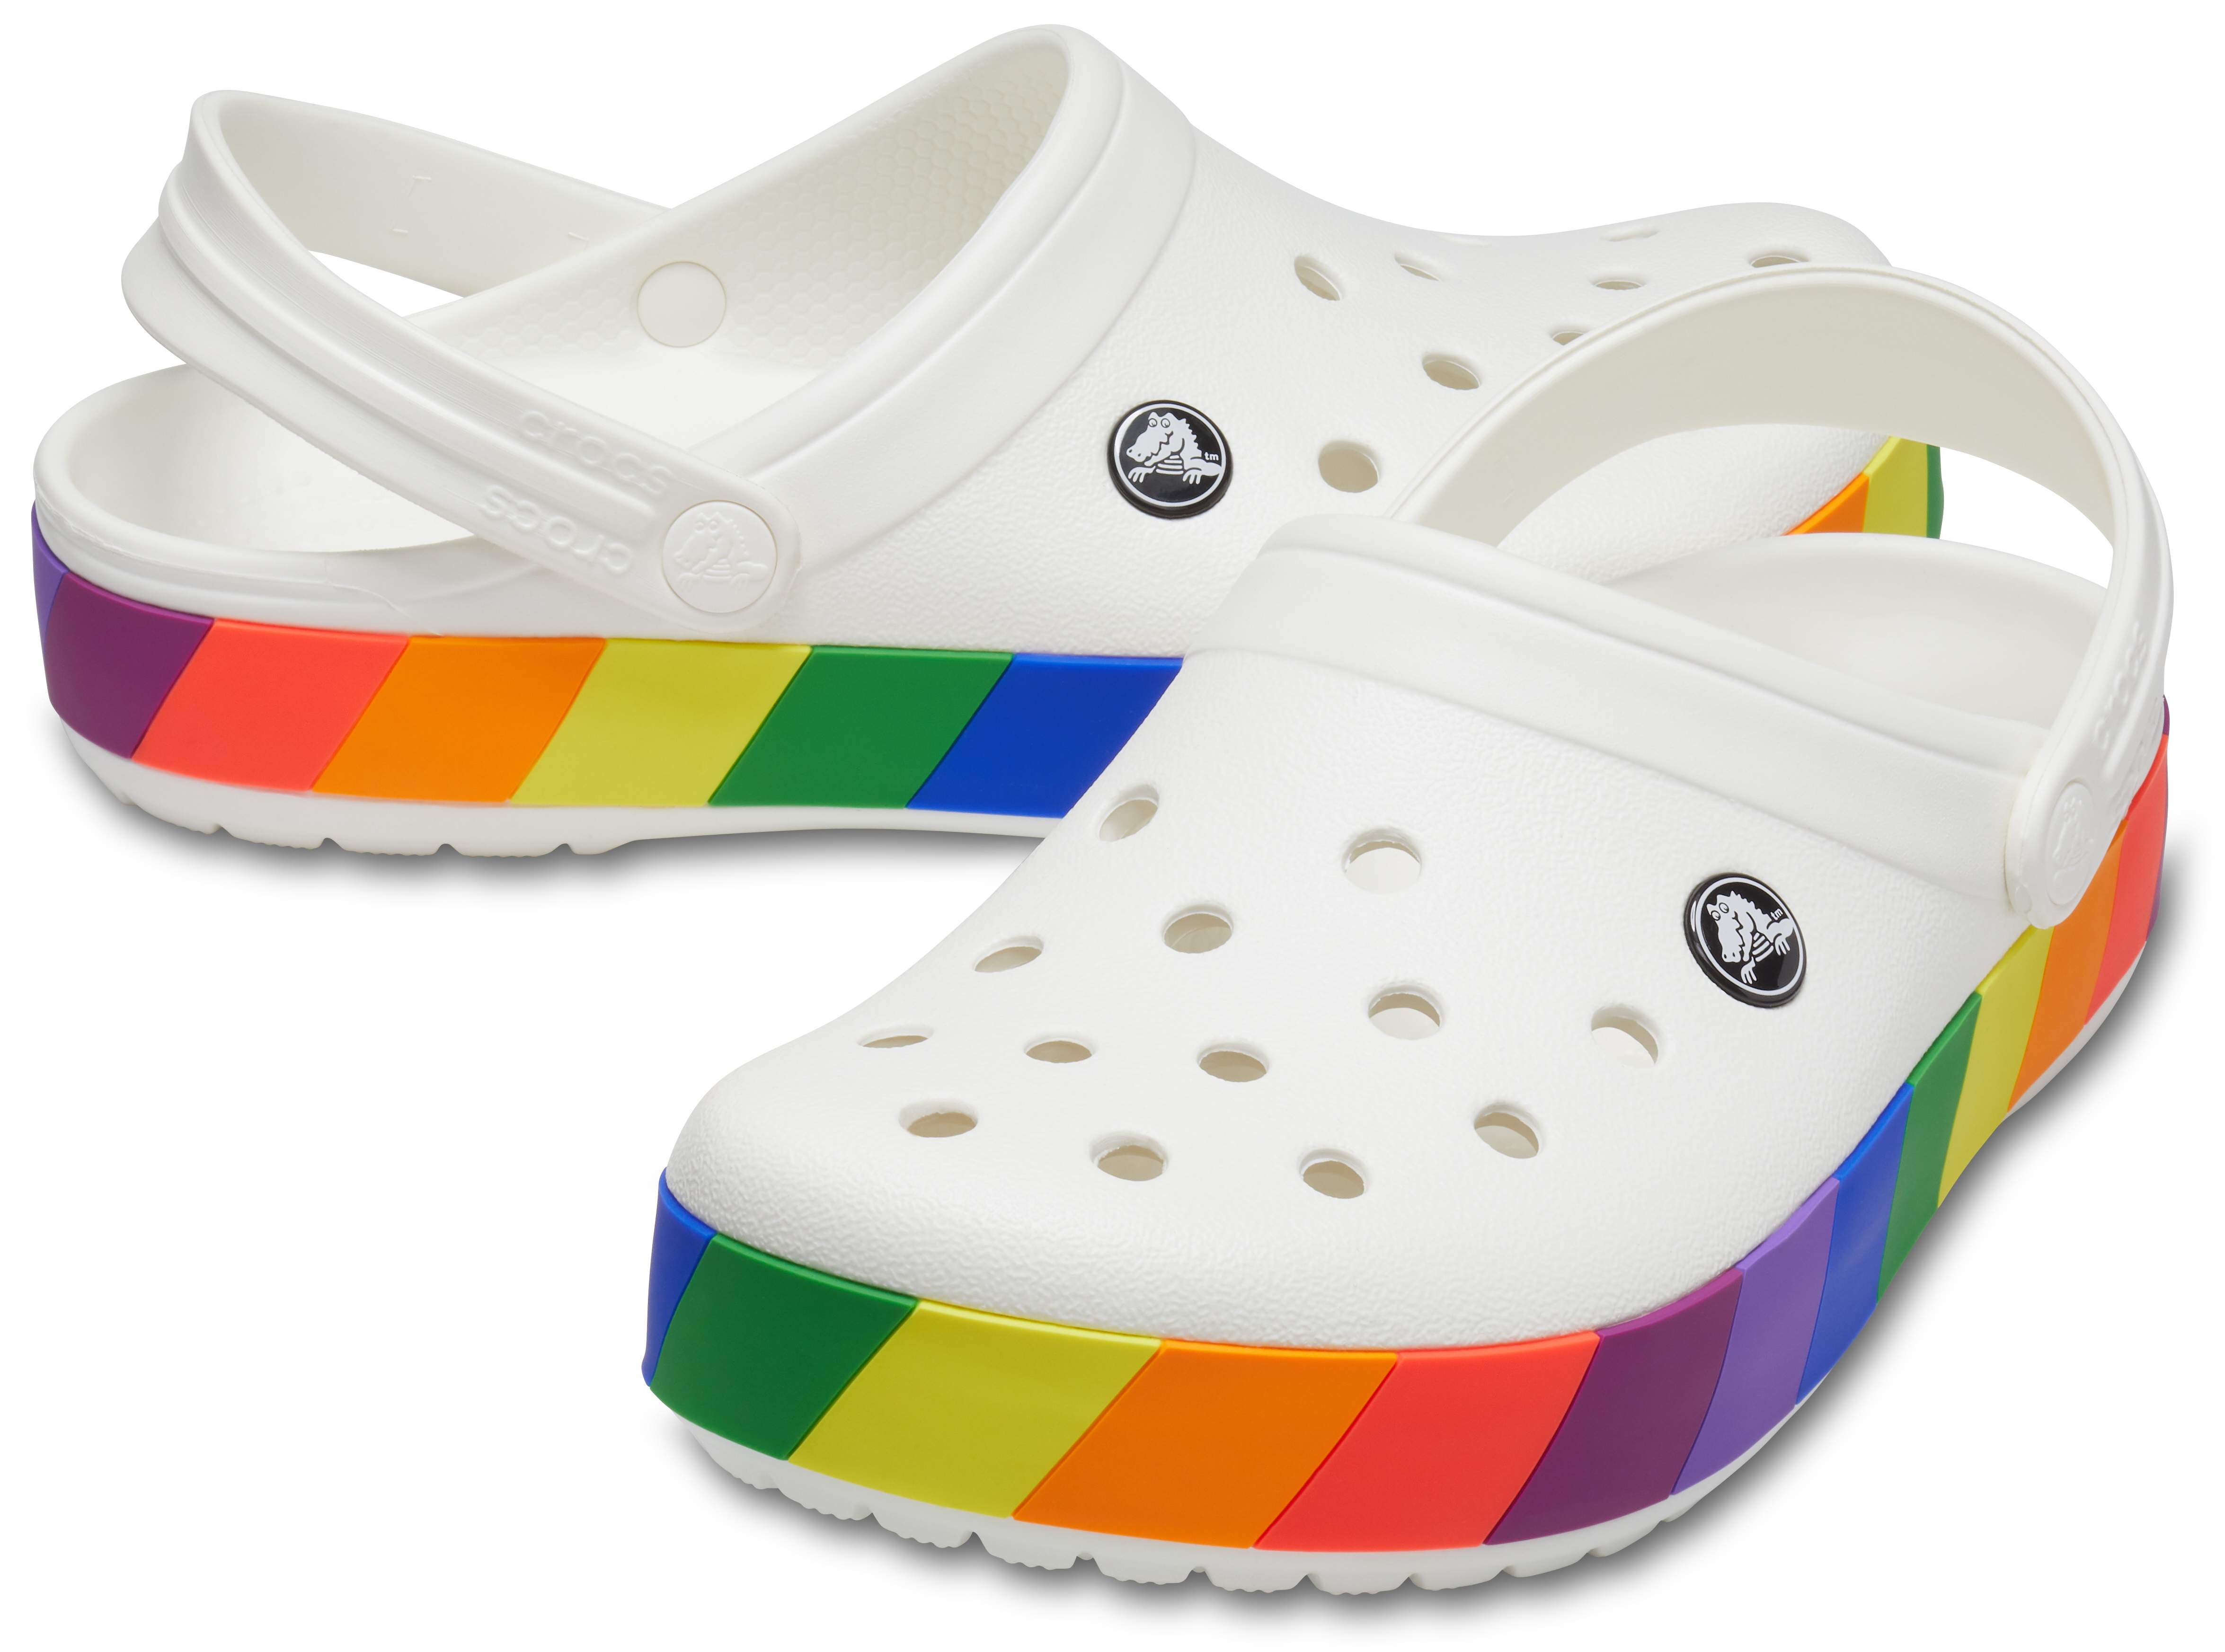 rainbow band crocs